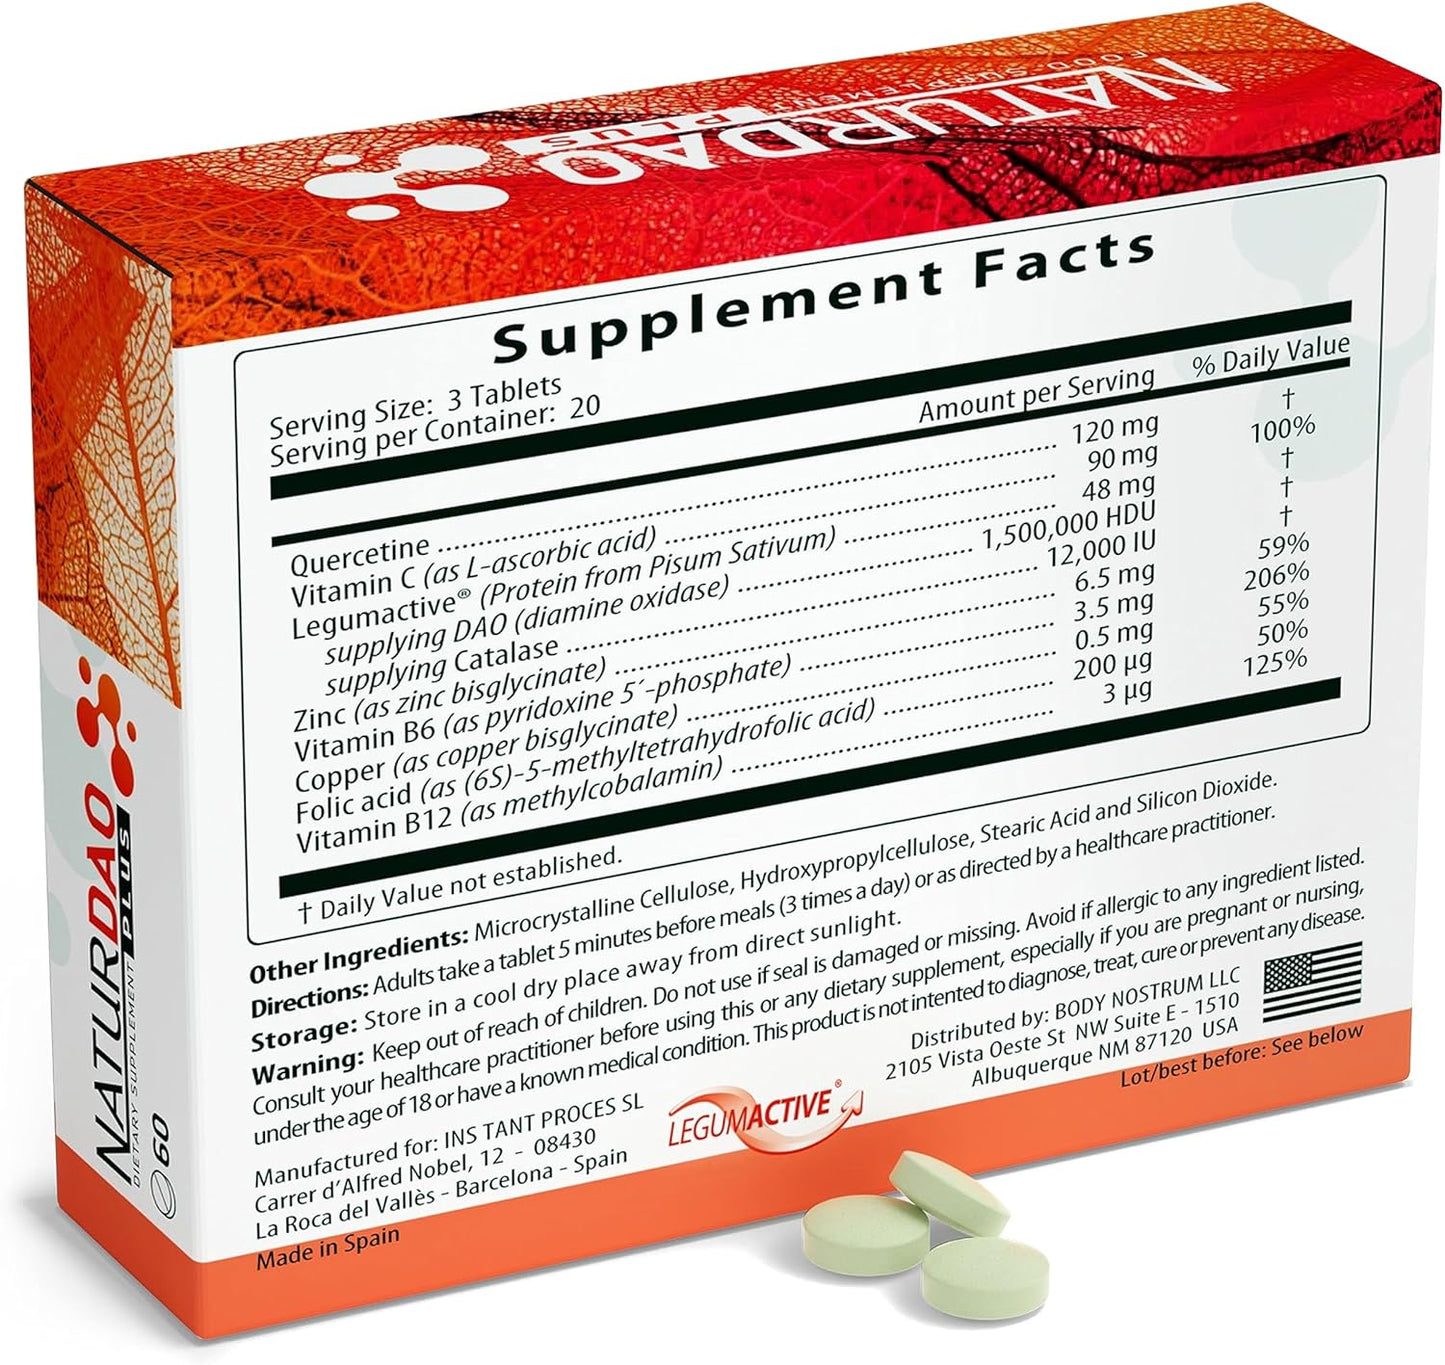 NATURDAO Plus – Histamine Block - 60 Tablets